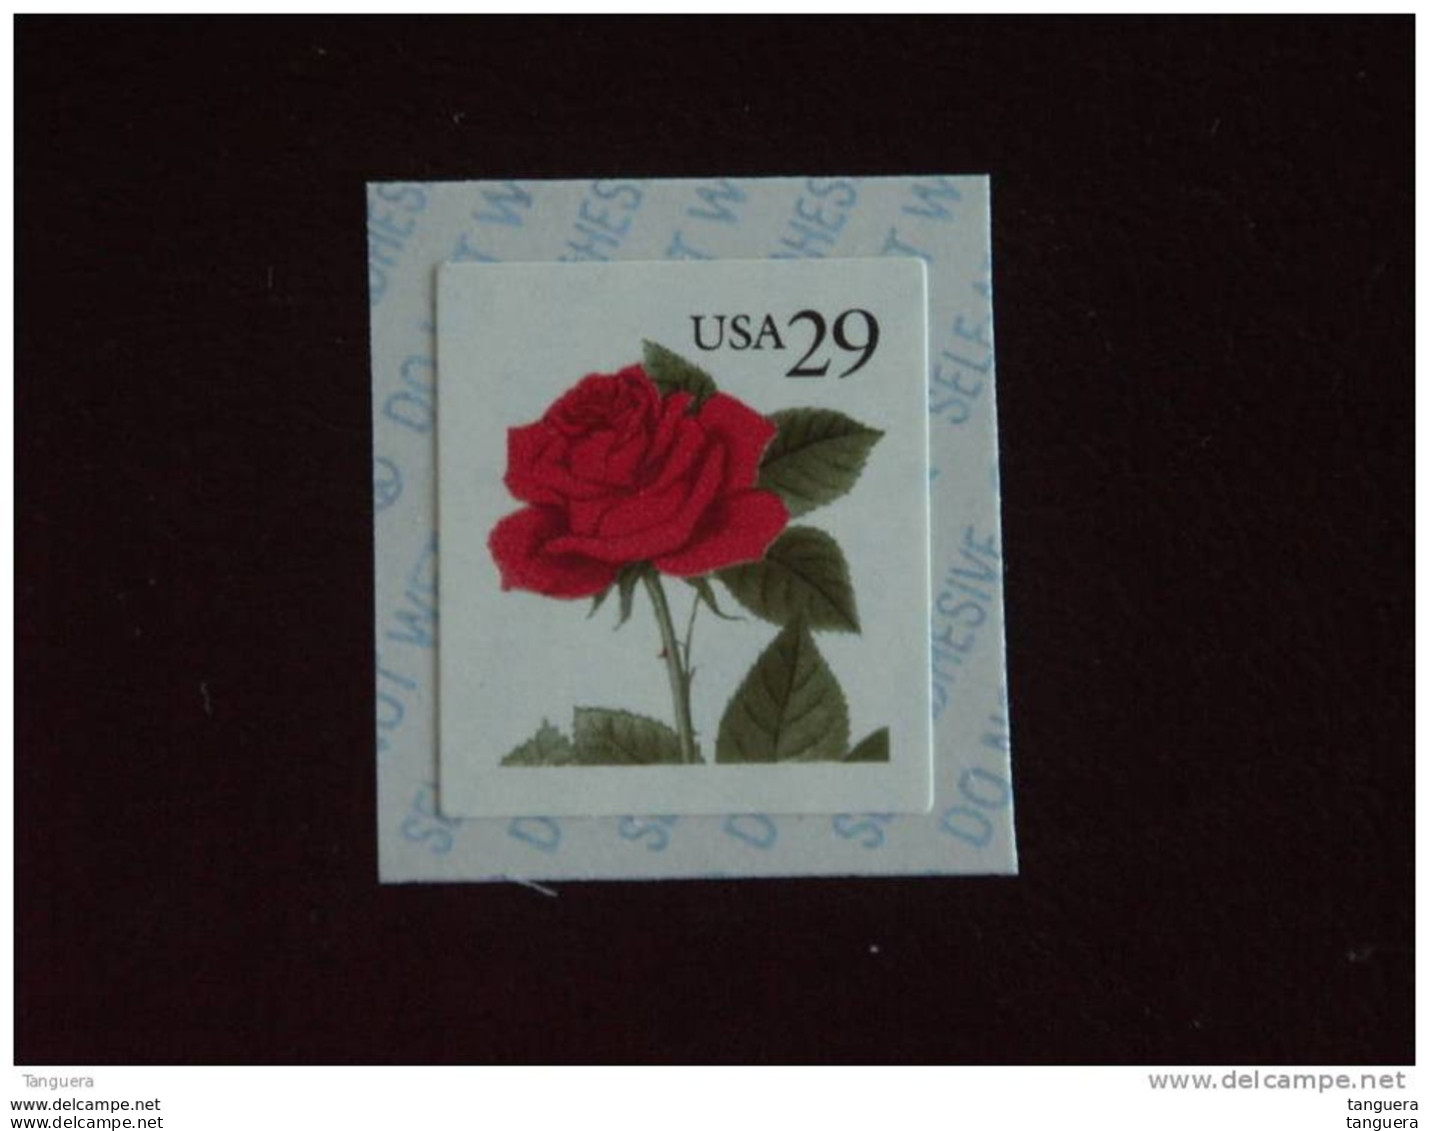 USA Etats-Unis D'Amerique United States 1993 Roos Roze Rose YV 2186 Sc 2490 MNH ** - Coils & Coil Singles